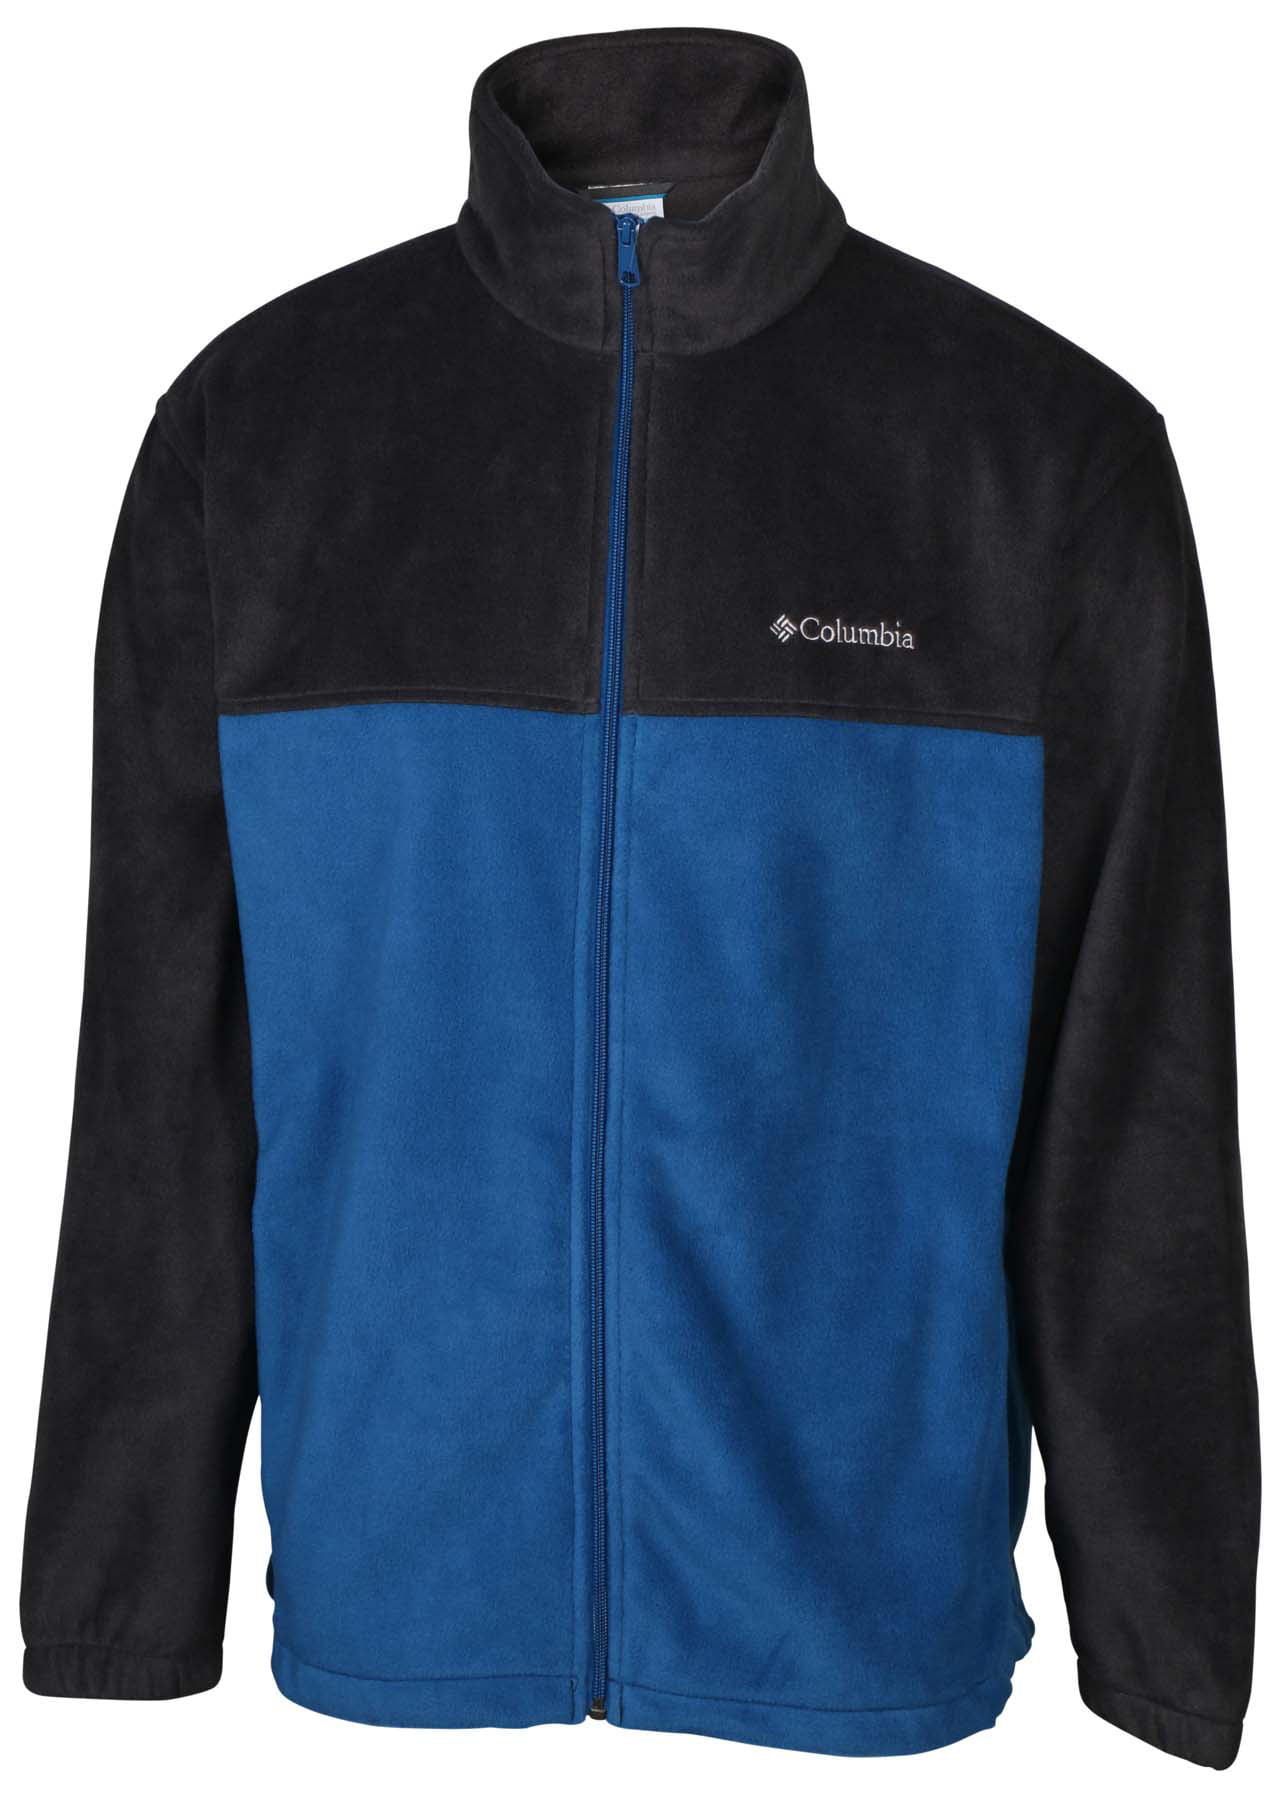 New $65 Columbia mens Granite Mountain full zip fleece jacket Big & Tall 